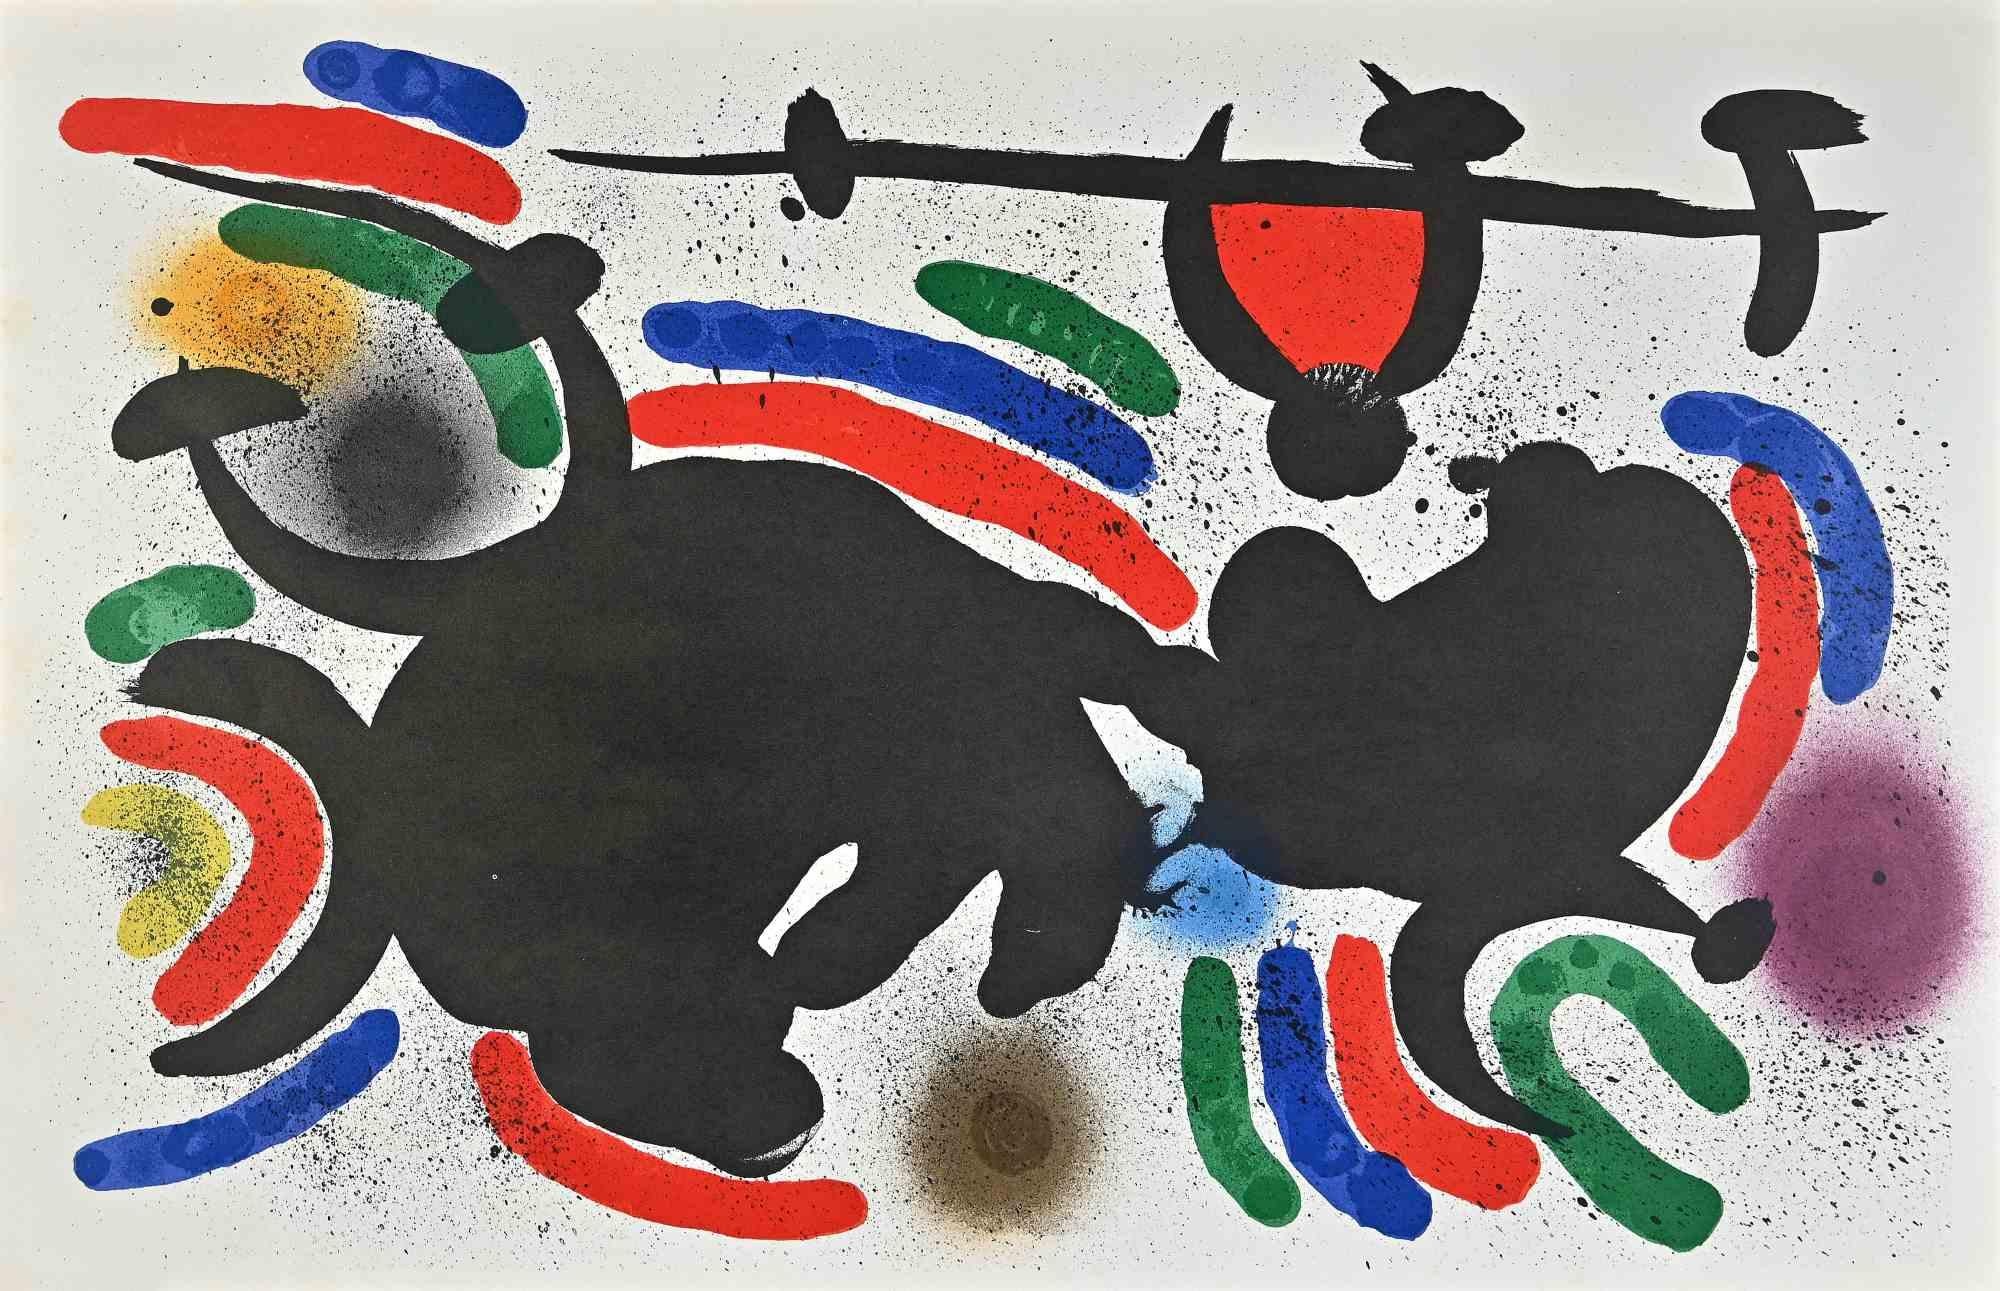 Joan Miró Abstract Print - Miró Lithographe I - Plate IV - Lithograph by Joan Mirò - 1972